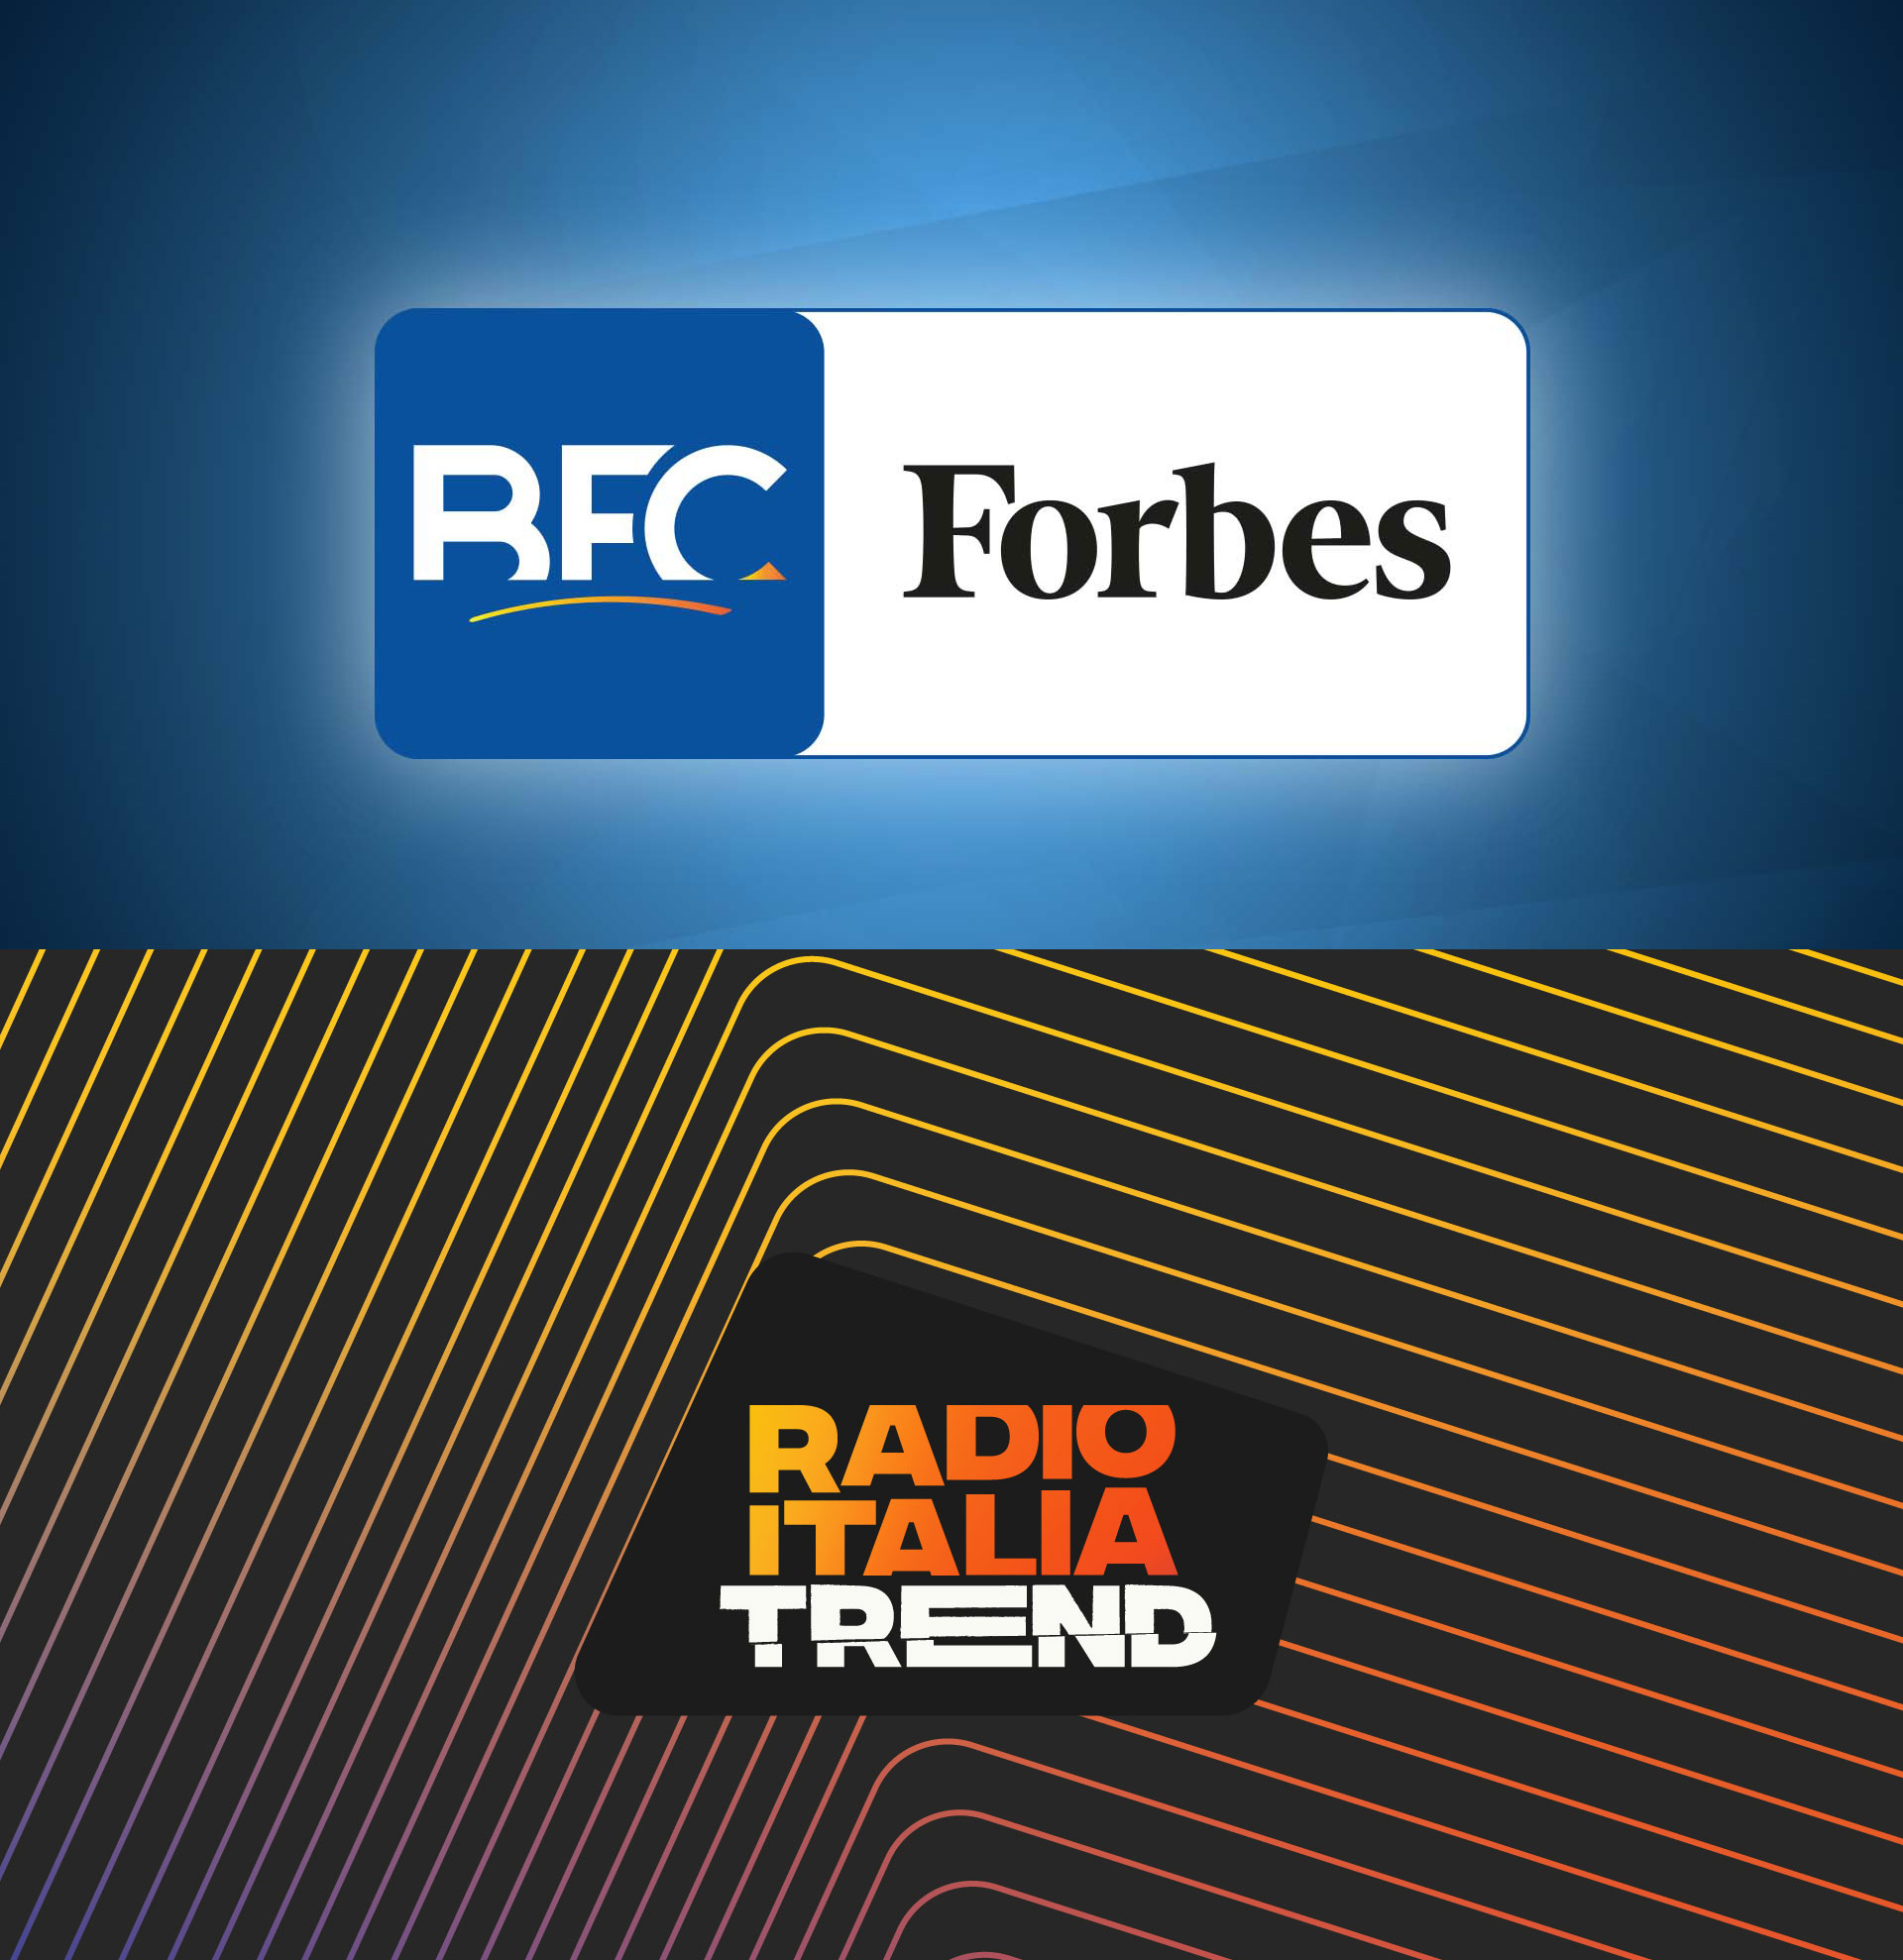 Radio Italia Trend e BFC Forbes su Rakuten TV